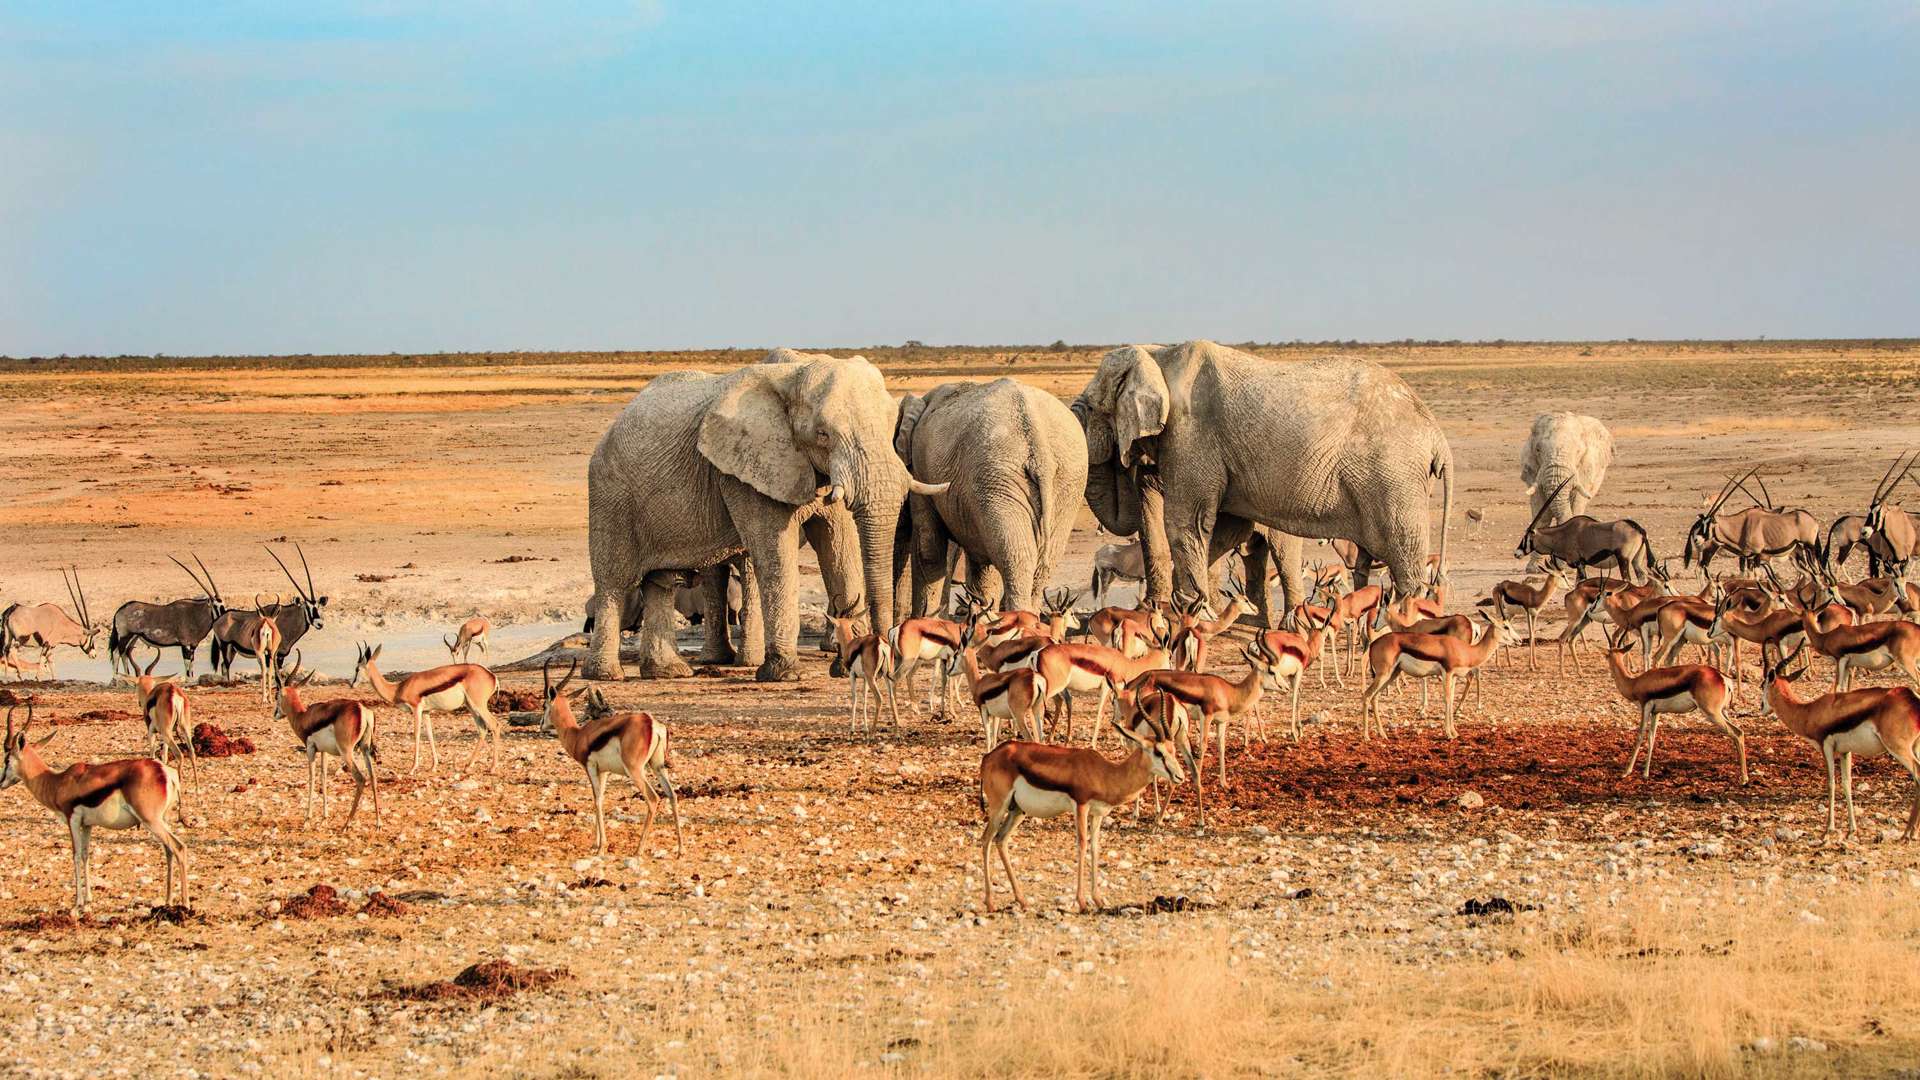 Herd Of Elephants, drinking from a waterhole, Etosha National Park, Namibia